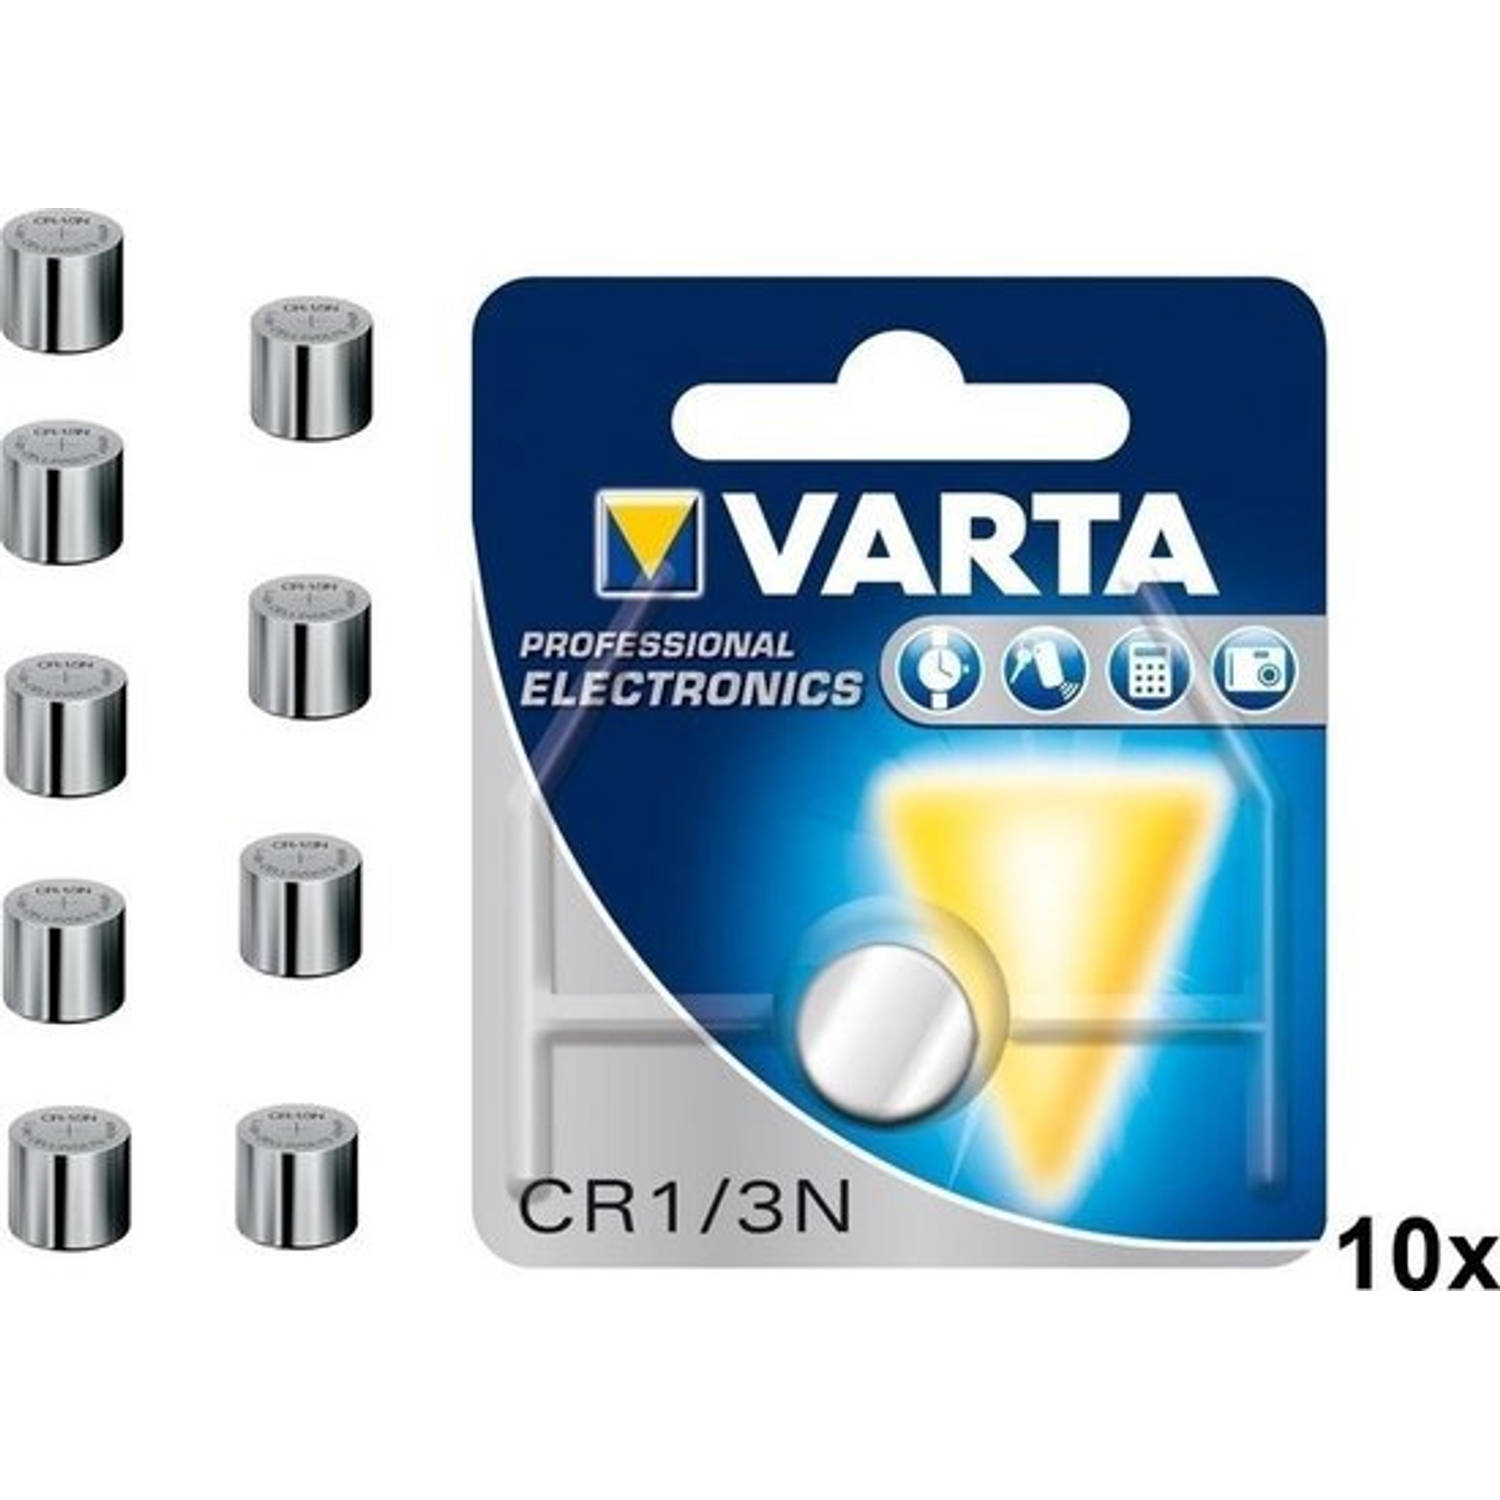 10 Stuks - Varta Professional Electronics CR 1/3 N 6131 170mAh 3V knoopcelbatterij